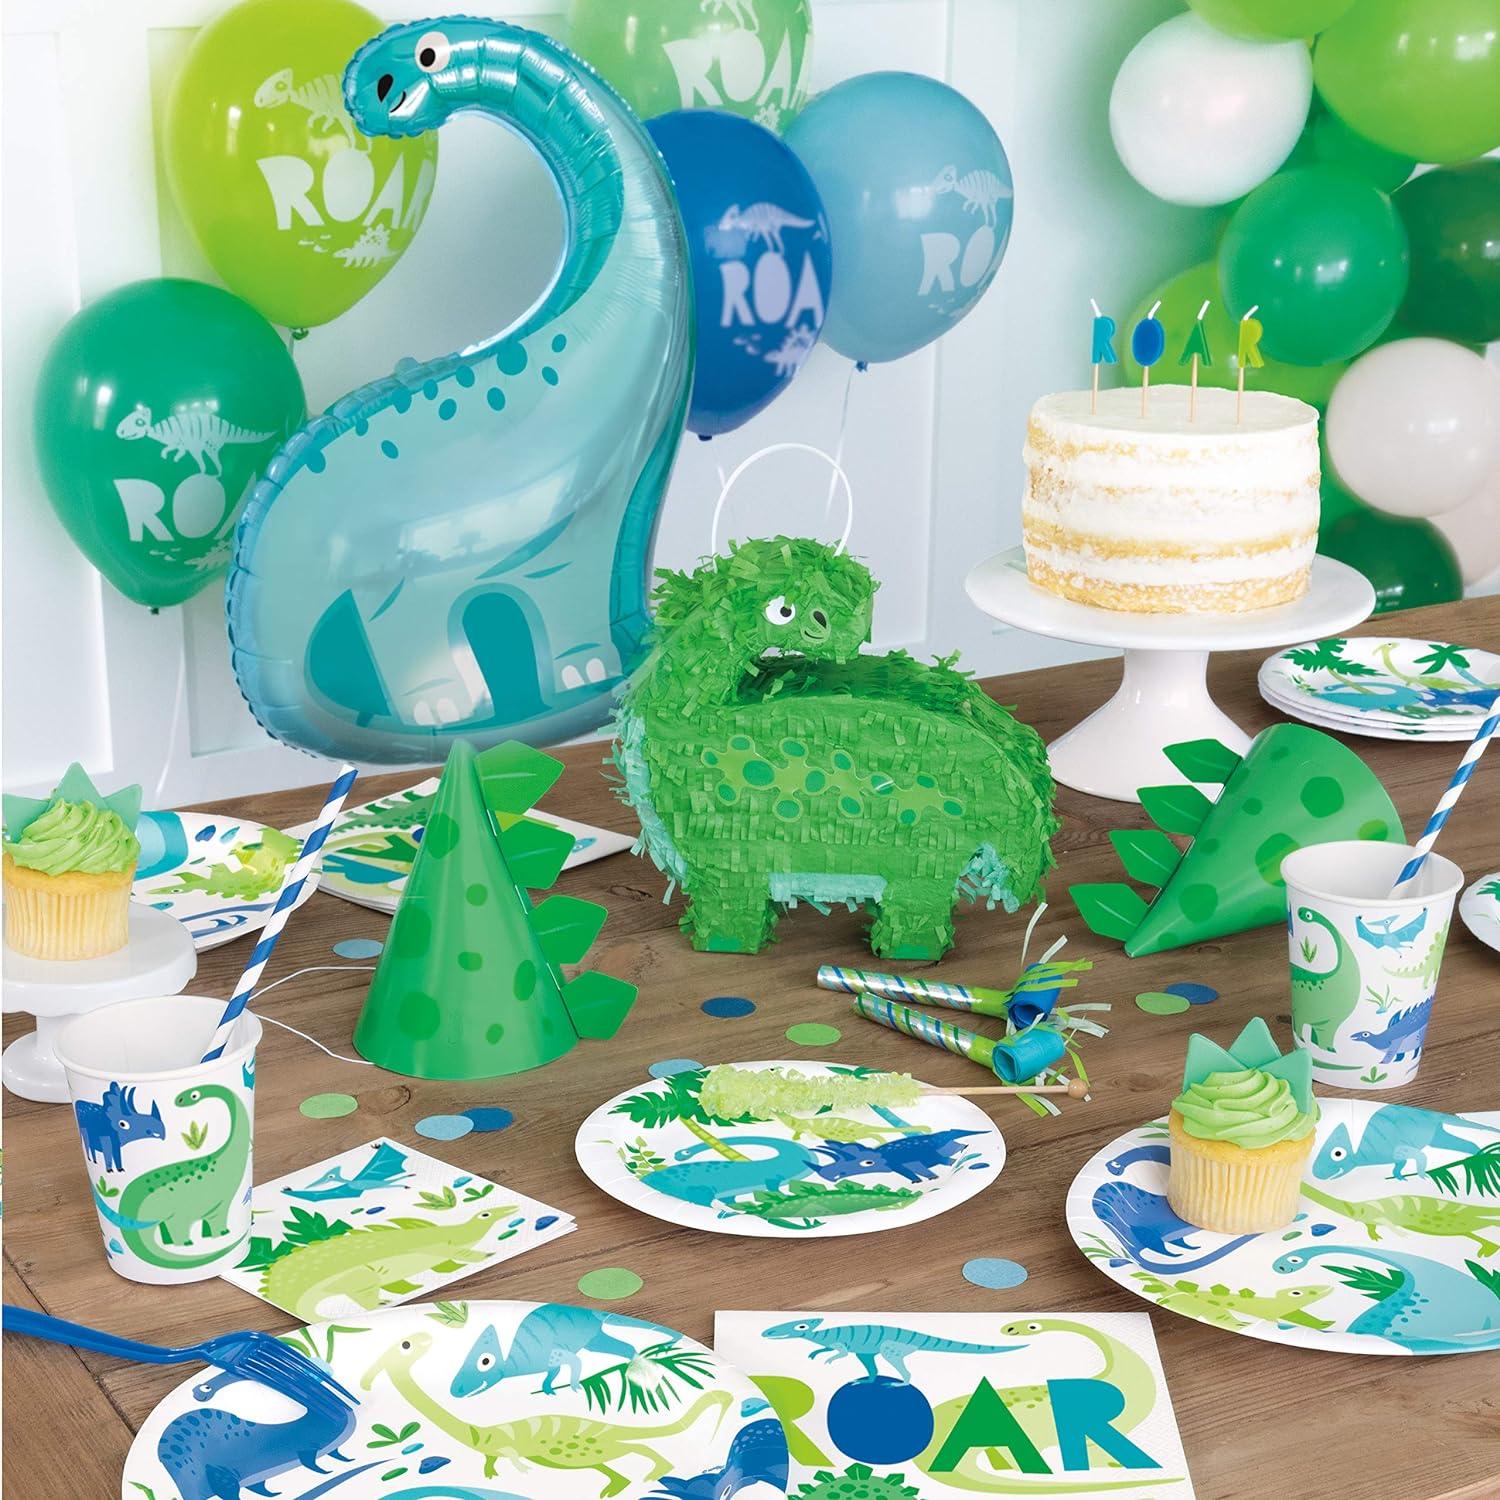 Blue & Green Dinosaur Birthday Party Dinner Plates, Pack of 8 | Amazing Pinatas